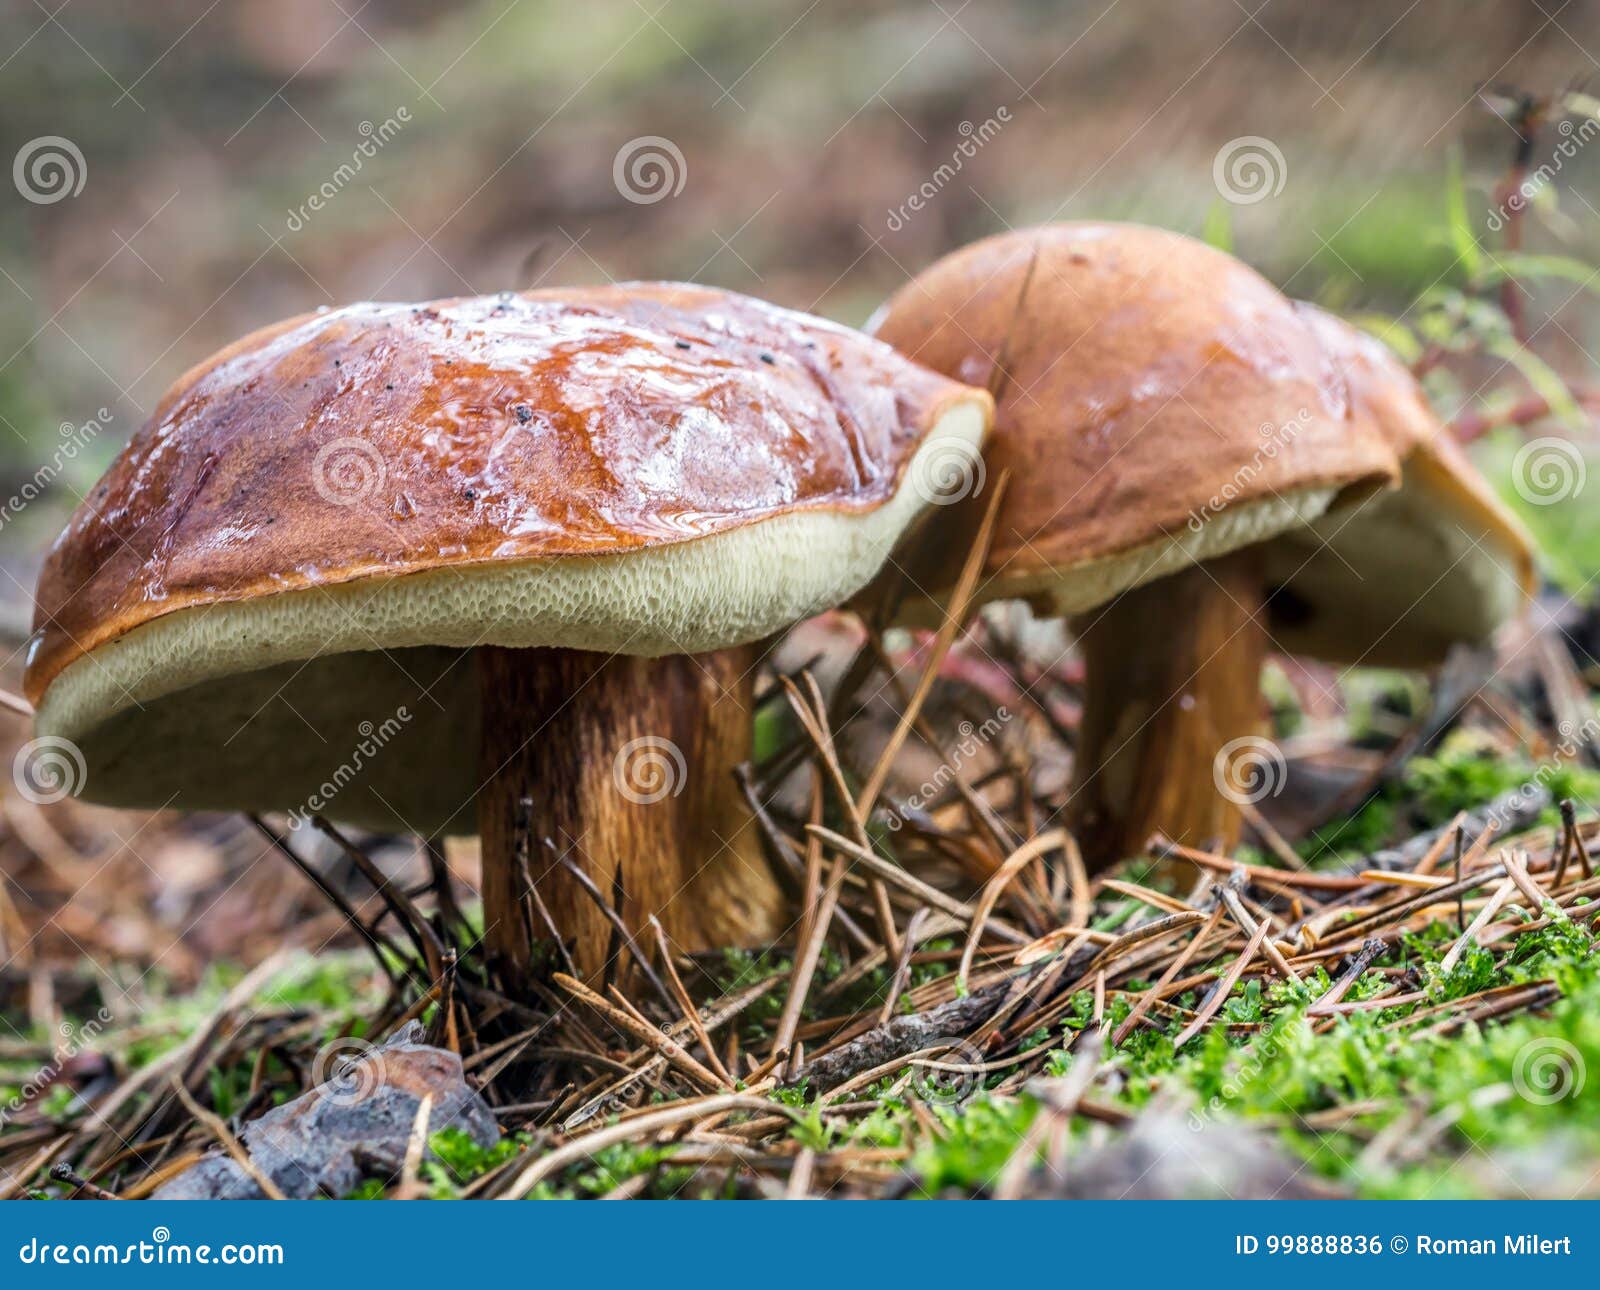 two slippery jack mushrooms